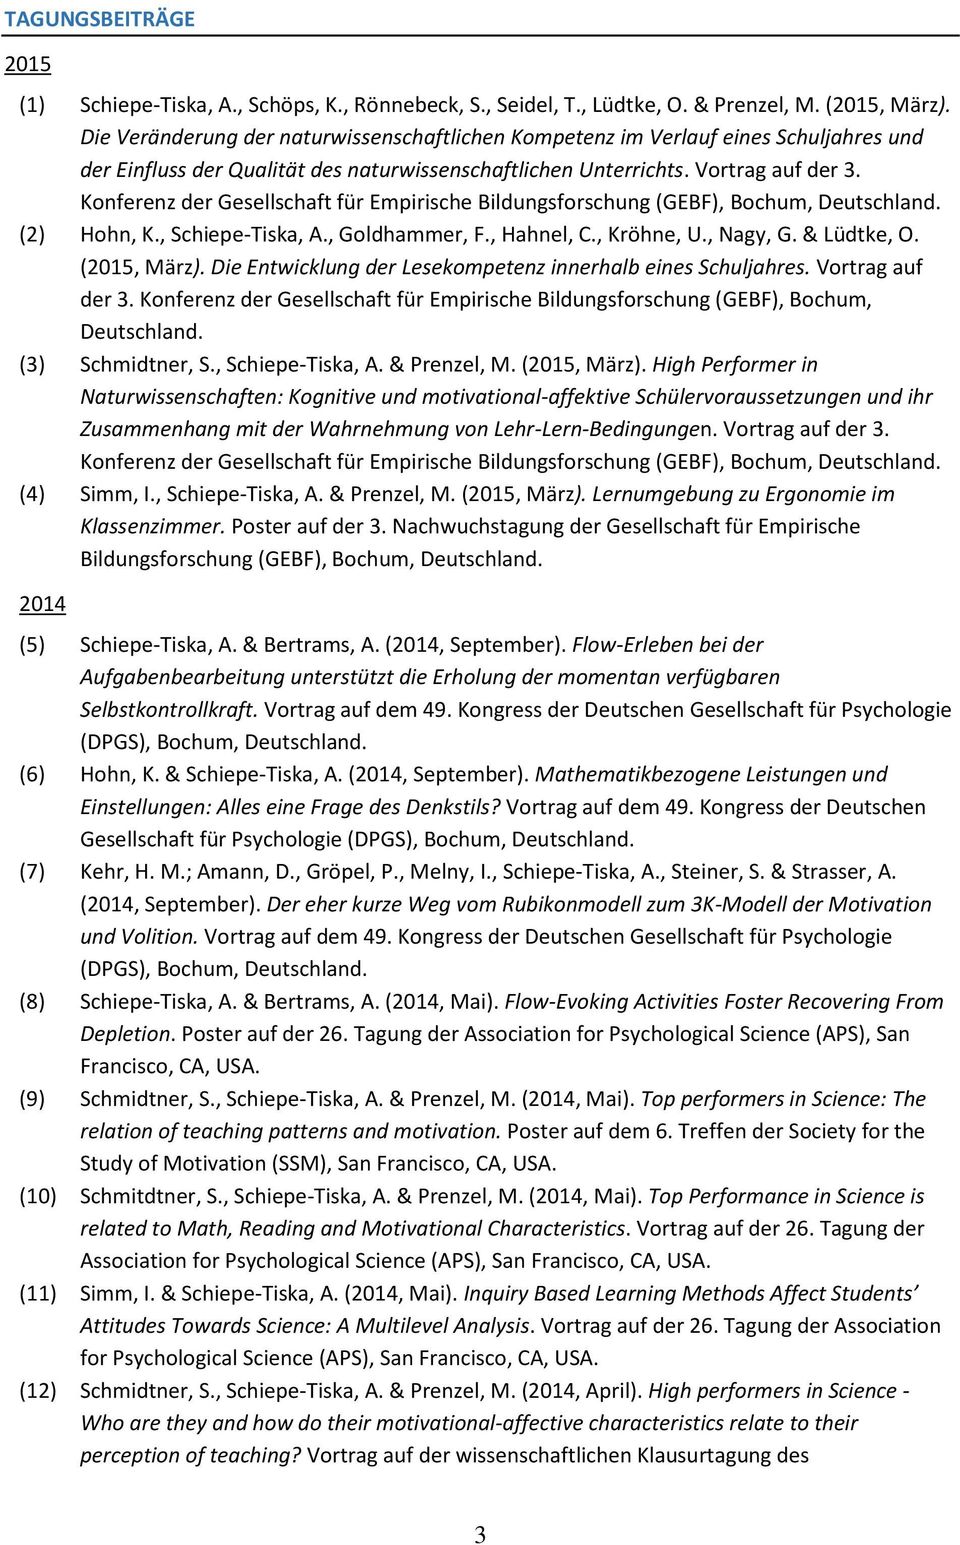 Konferenz der Gesellschaft für Empirische Bildungsforschung (GEBF), Bochum, (2) Hohn, K., Schiepe-Tiska, A., Goldhammer, F., Hahnel, C., Kröhne, U., Nagy, G. & Lüdtke, O. (2015, März).